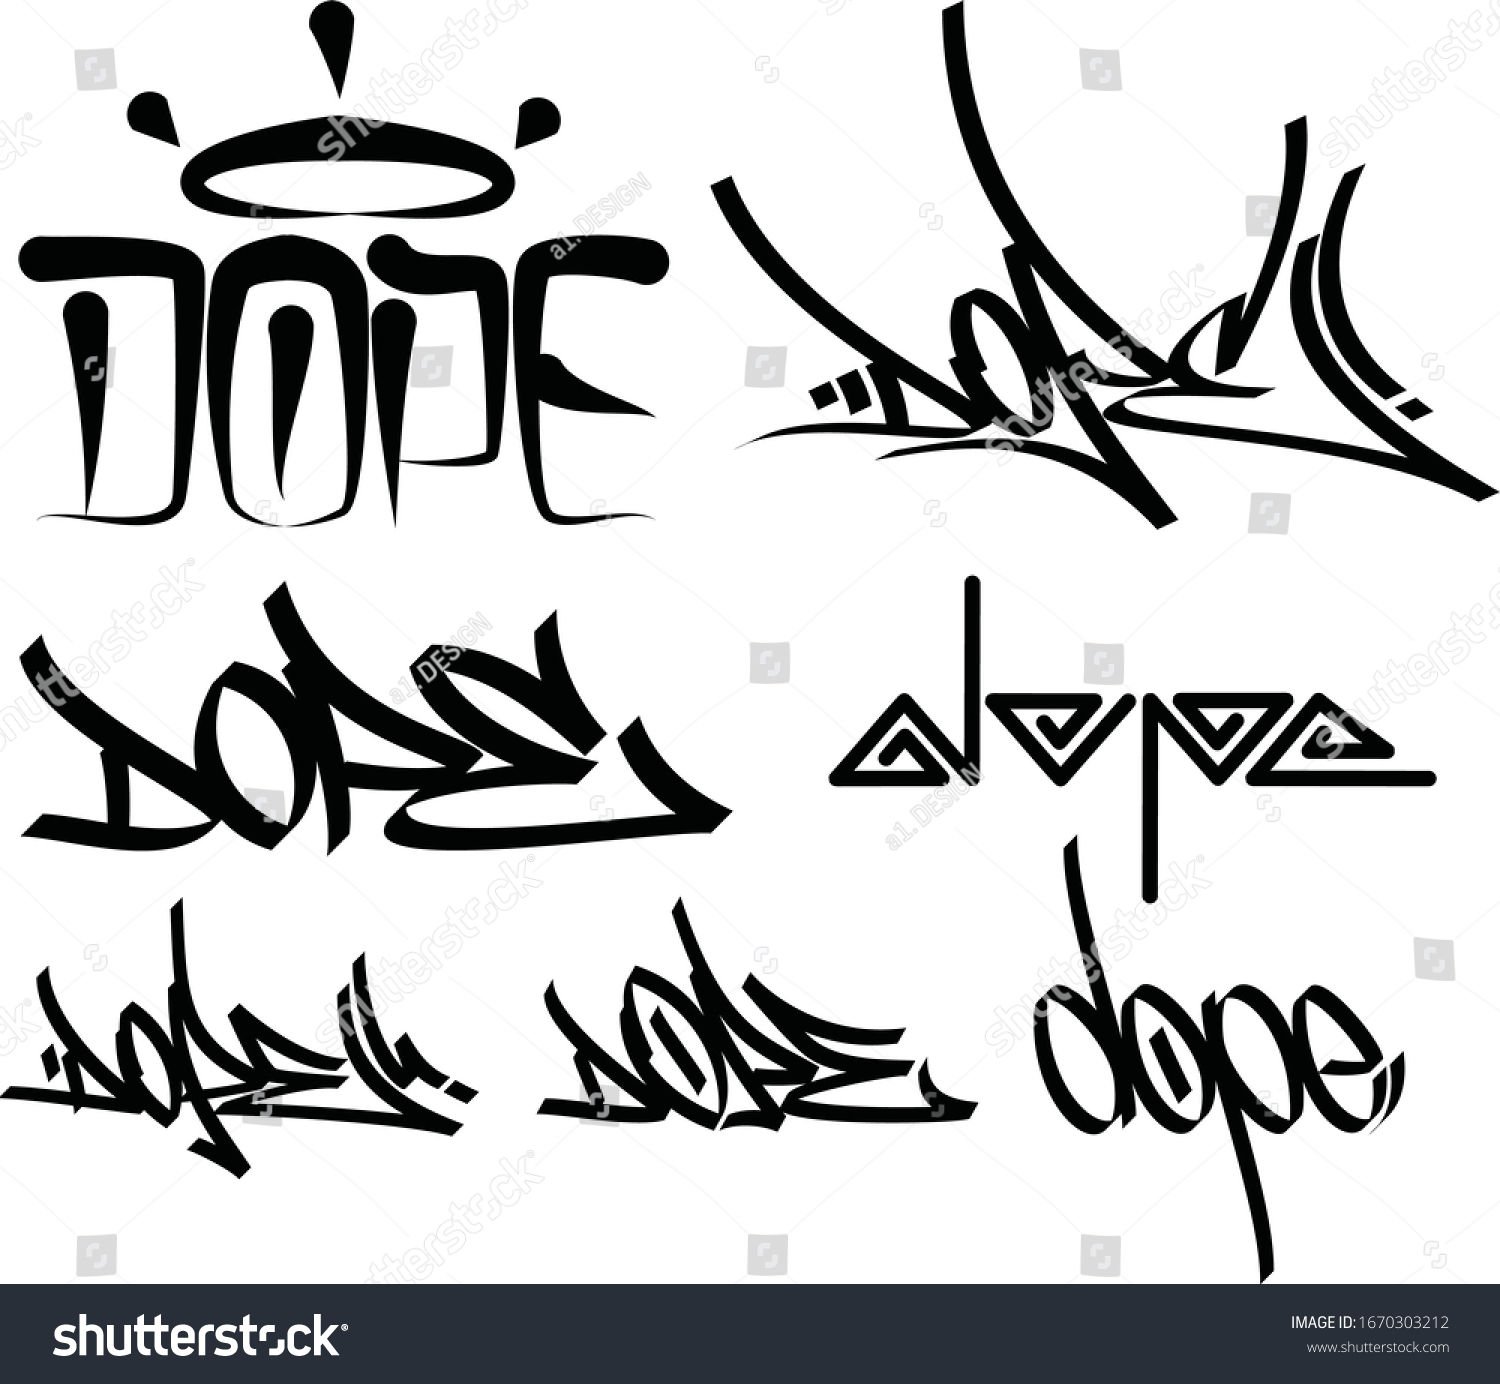 dope graffiti letters